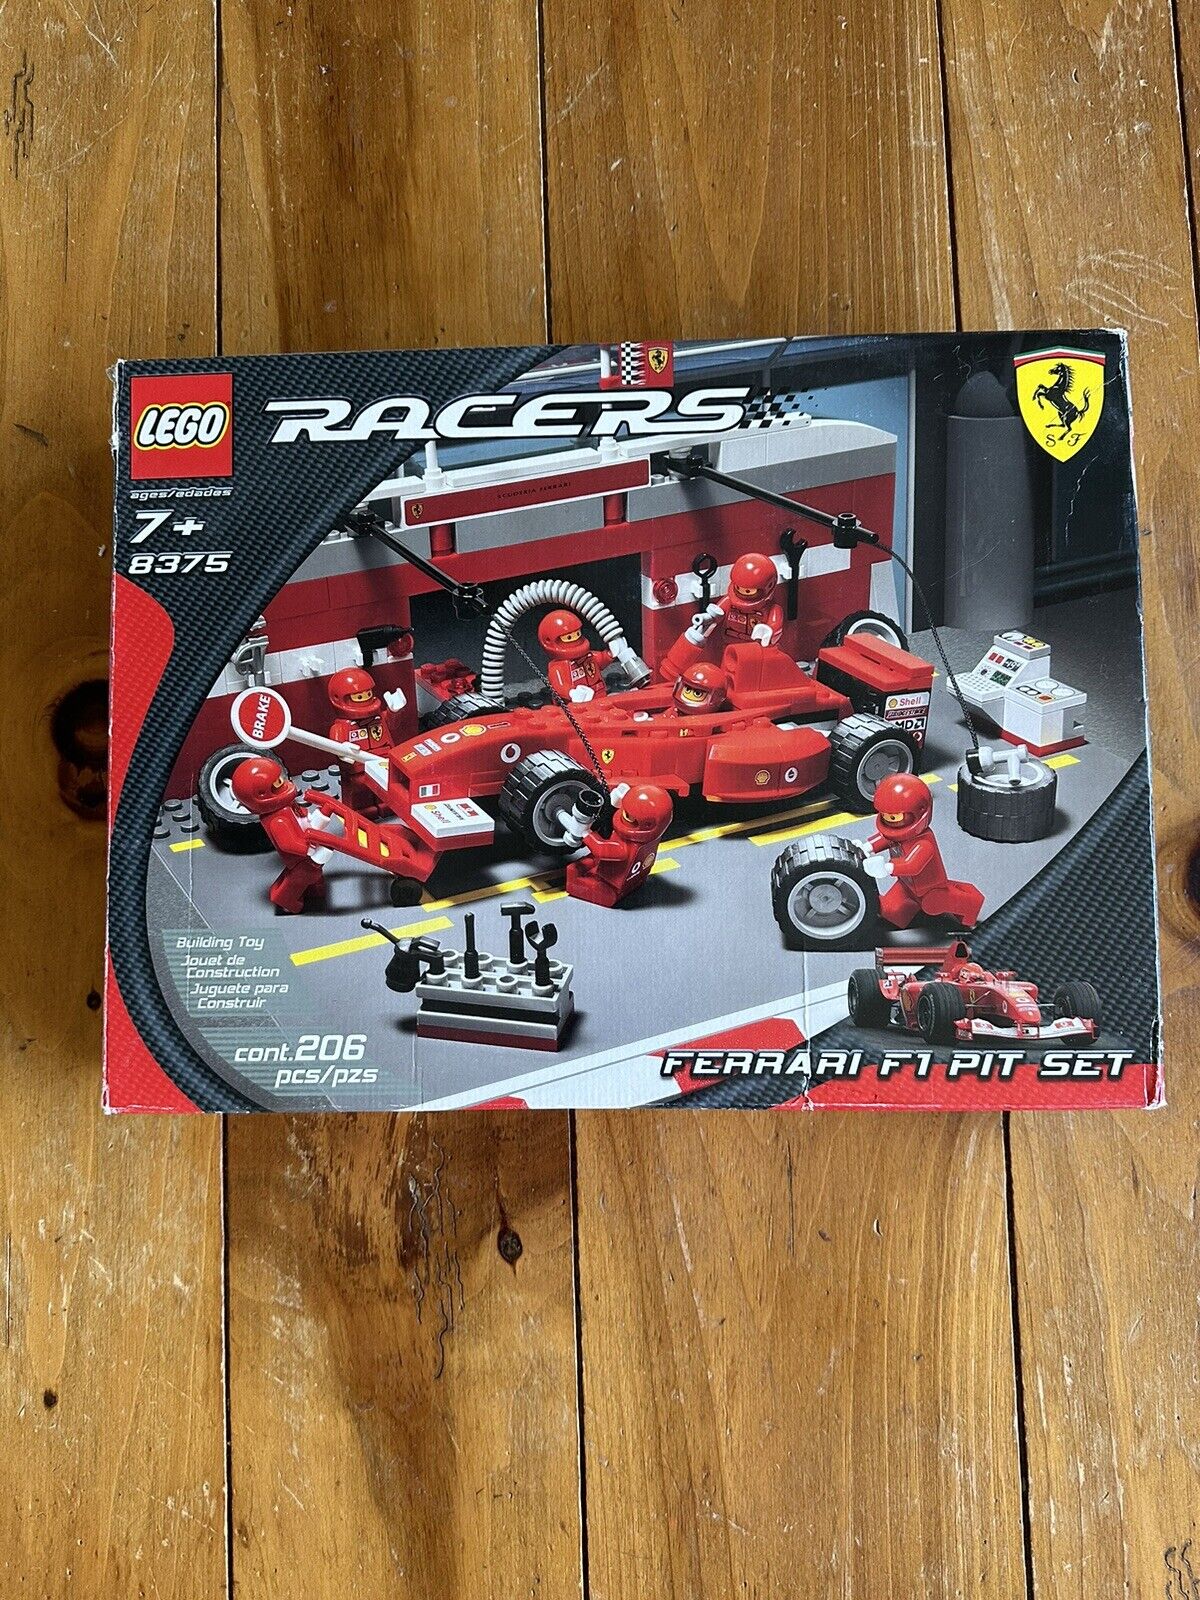 LEGO Racers F1 Pit Set 8375 Complete w/ Box Instructions 673419036320 | eBay